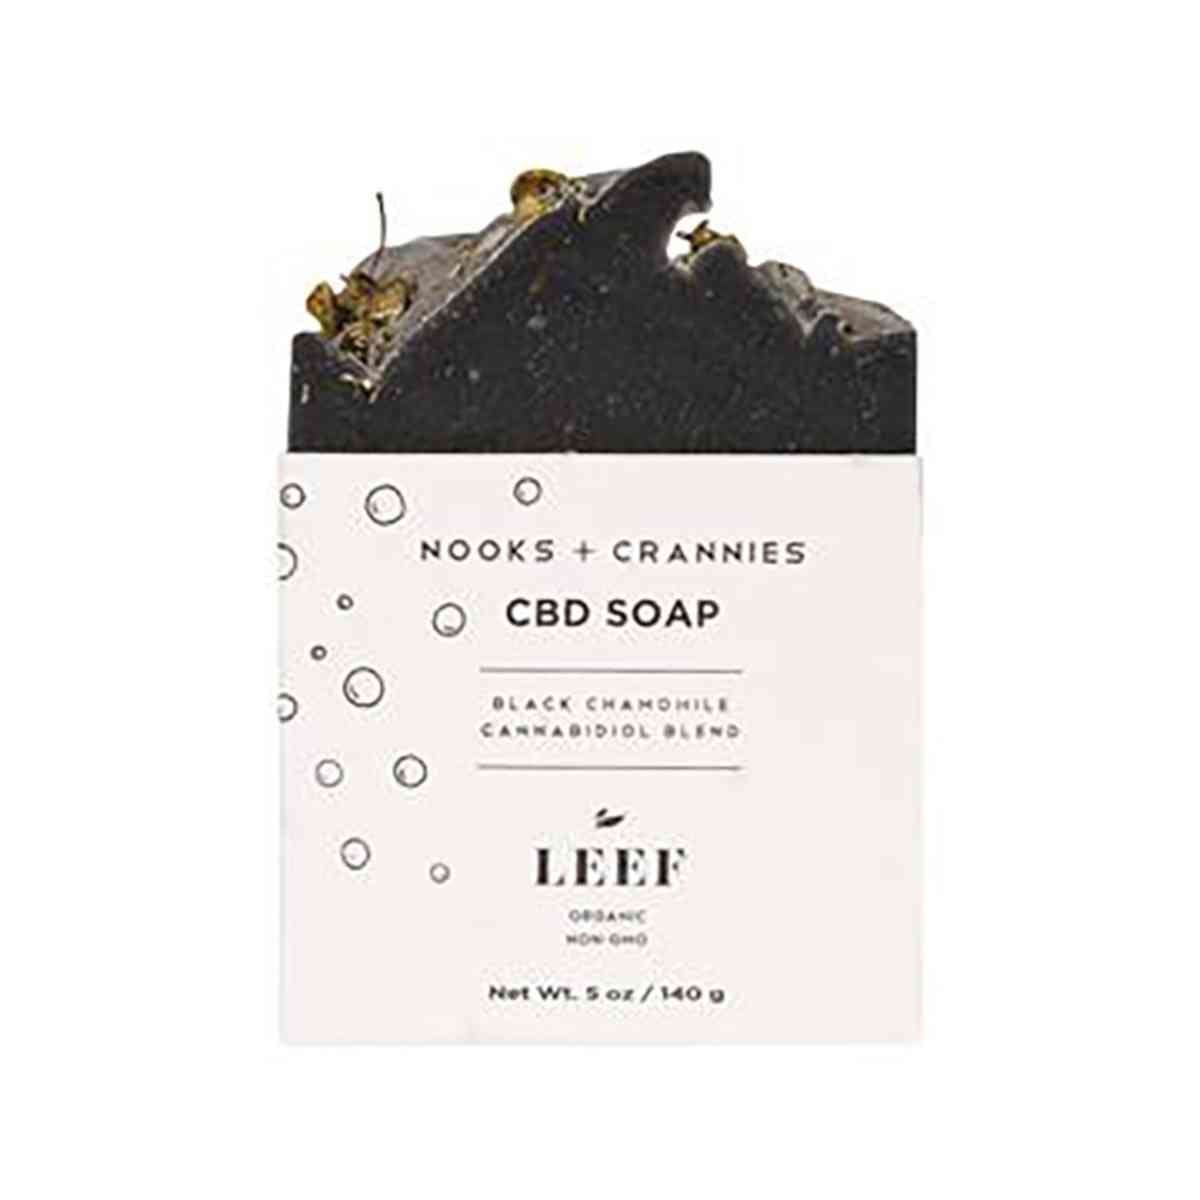 topicals-black-chamomile-soap-leef-organics